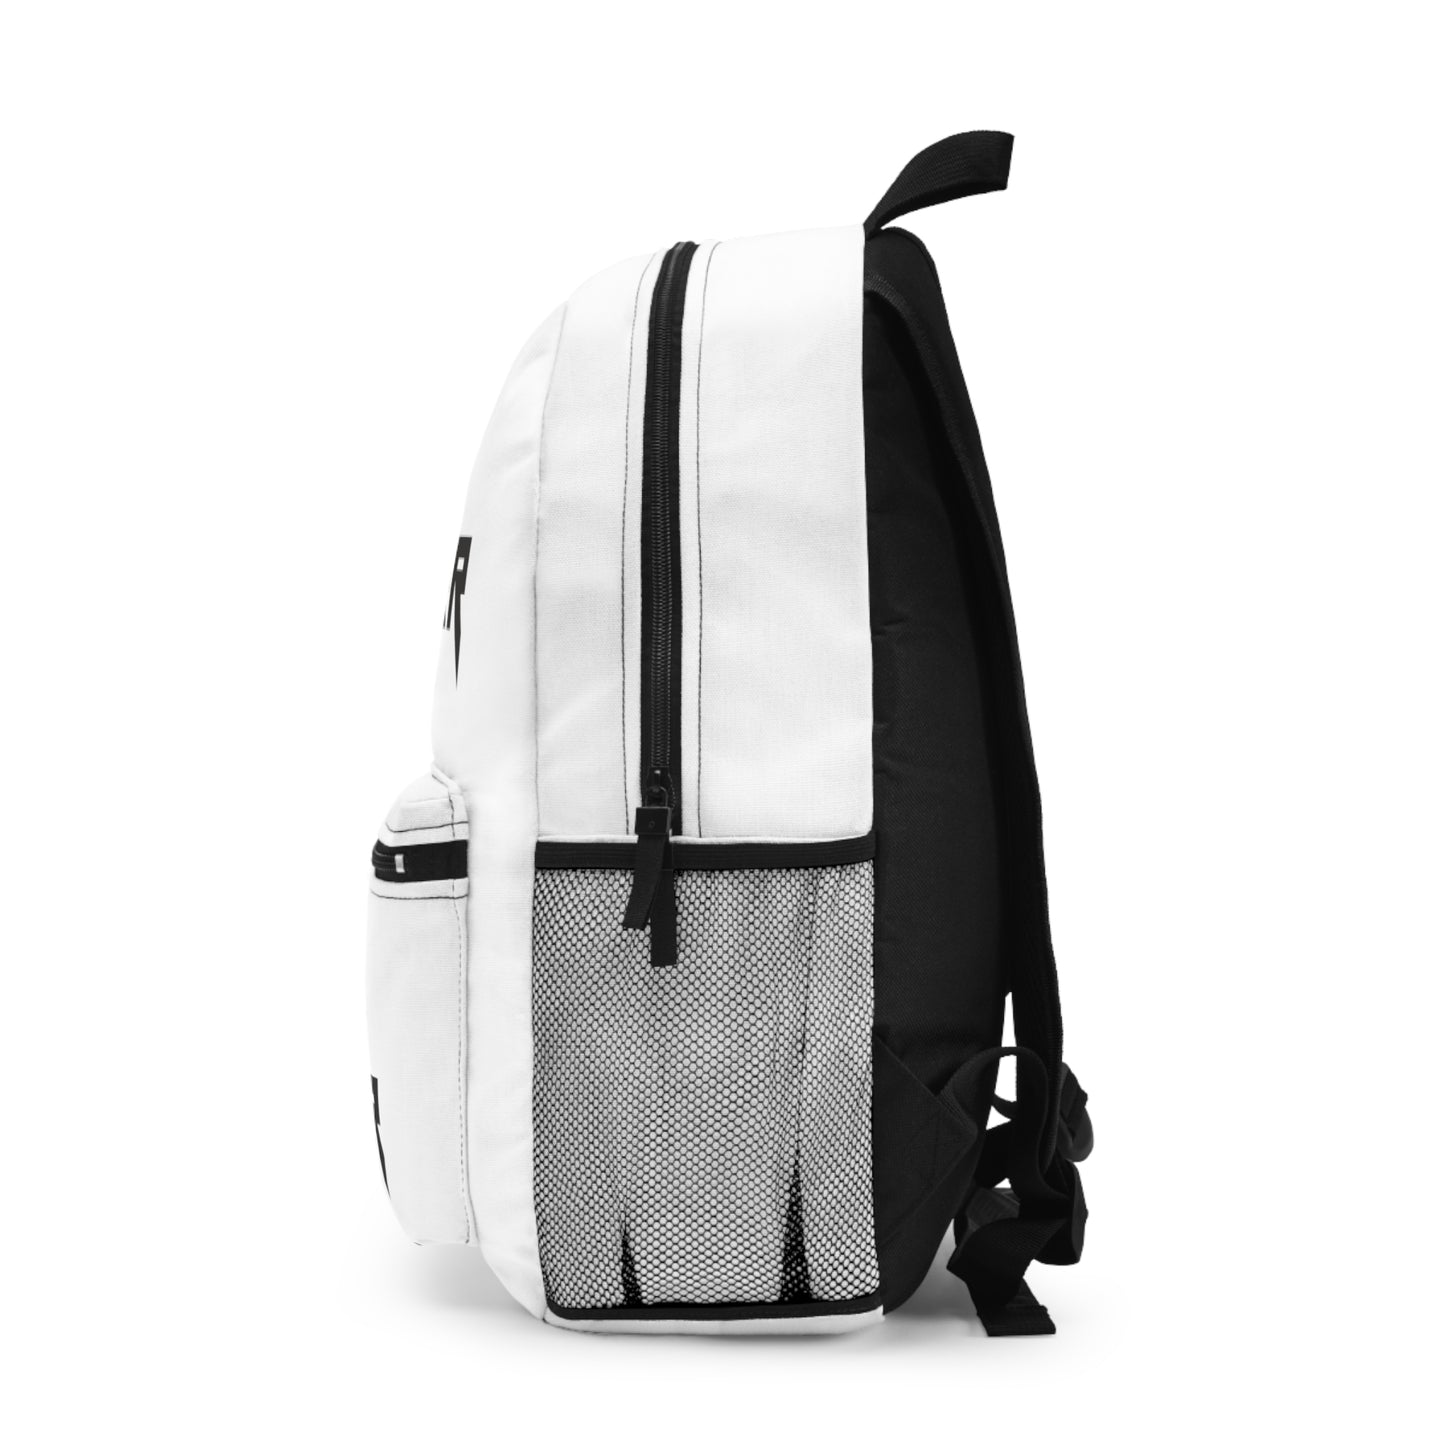 Stauber Backpack